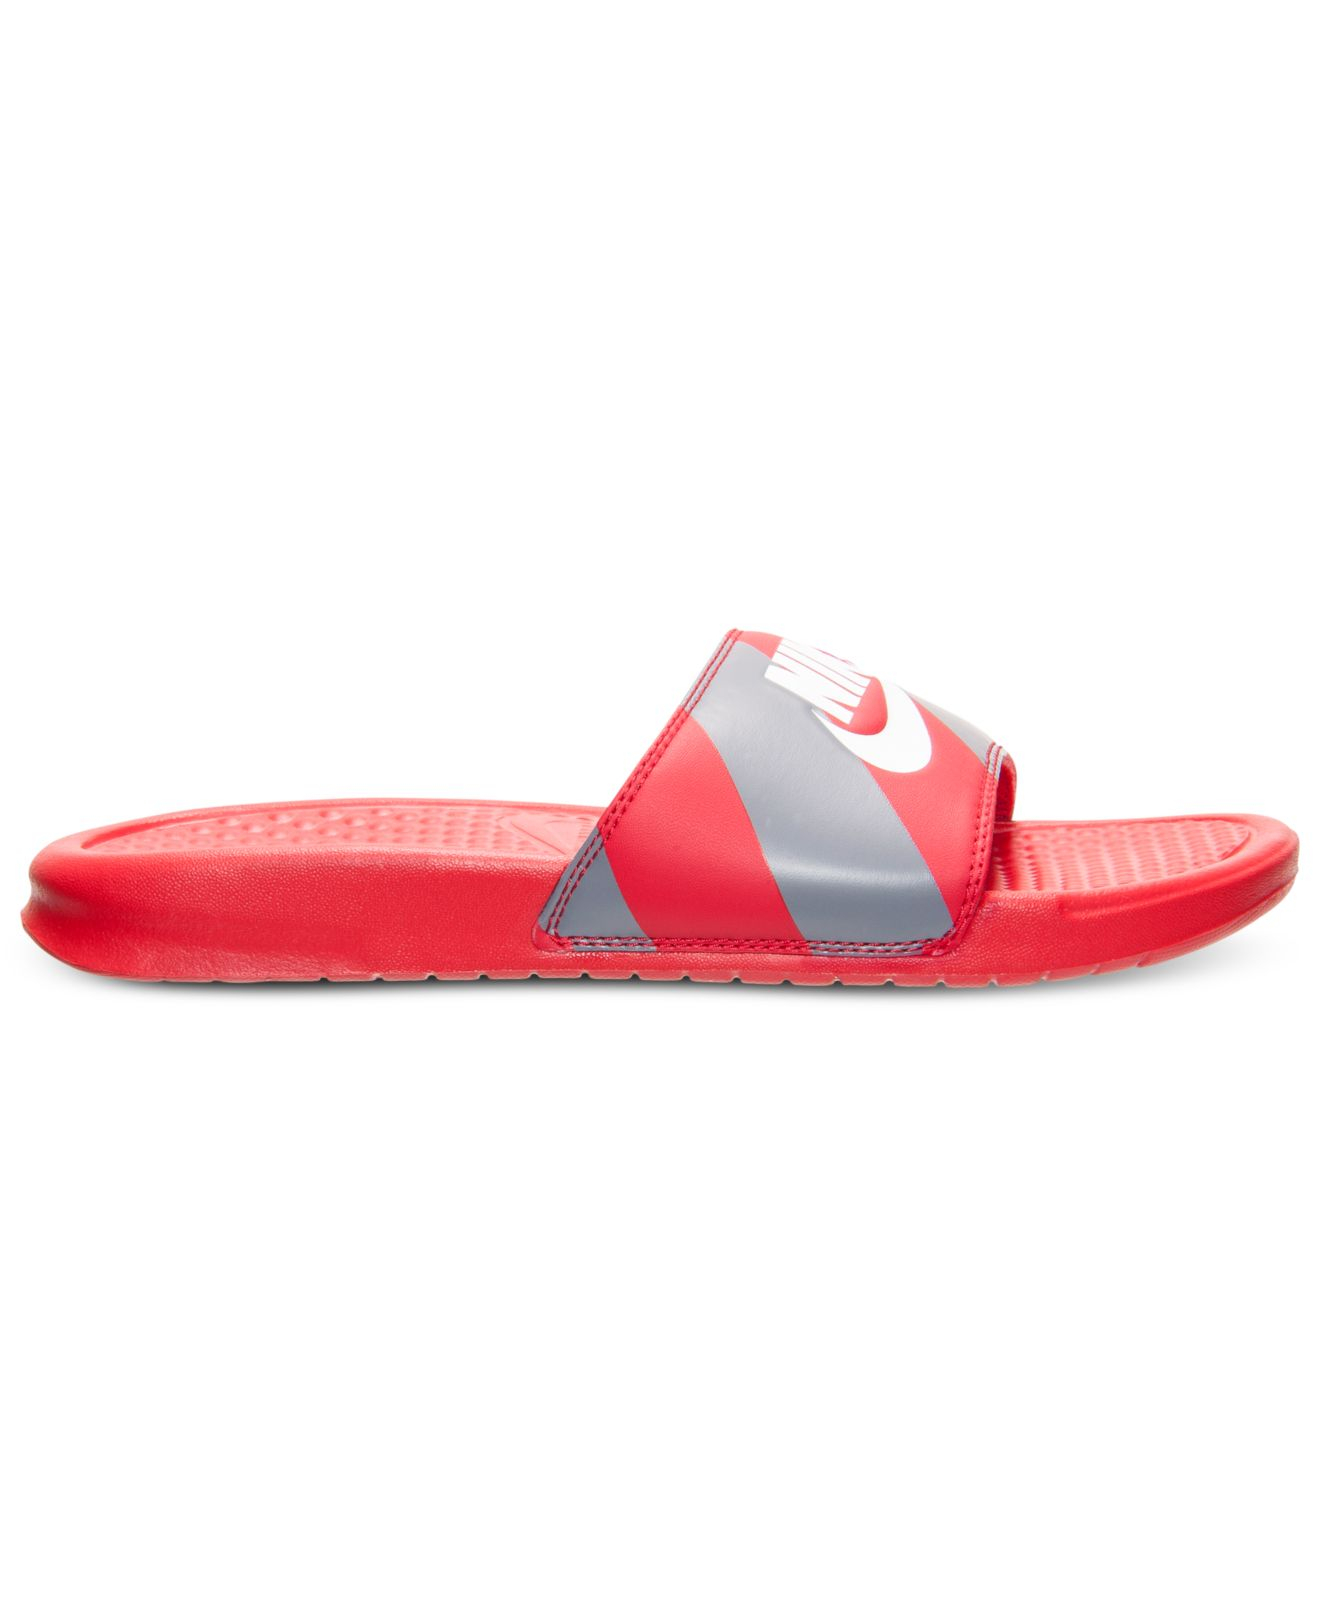 Lyst - Nike Men'S Benassi Jdi Print Slide Sandals From Finish Line in ...